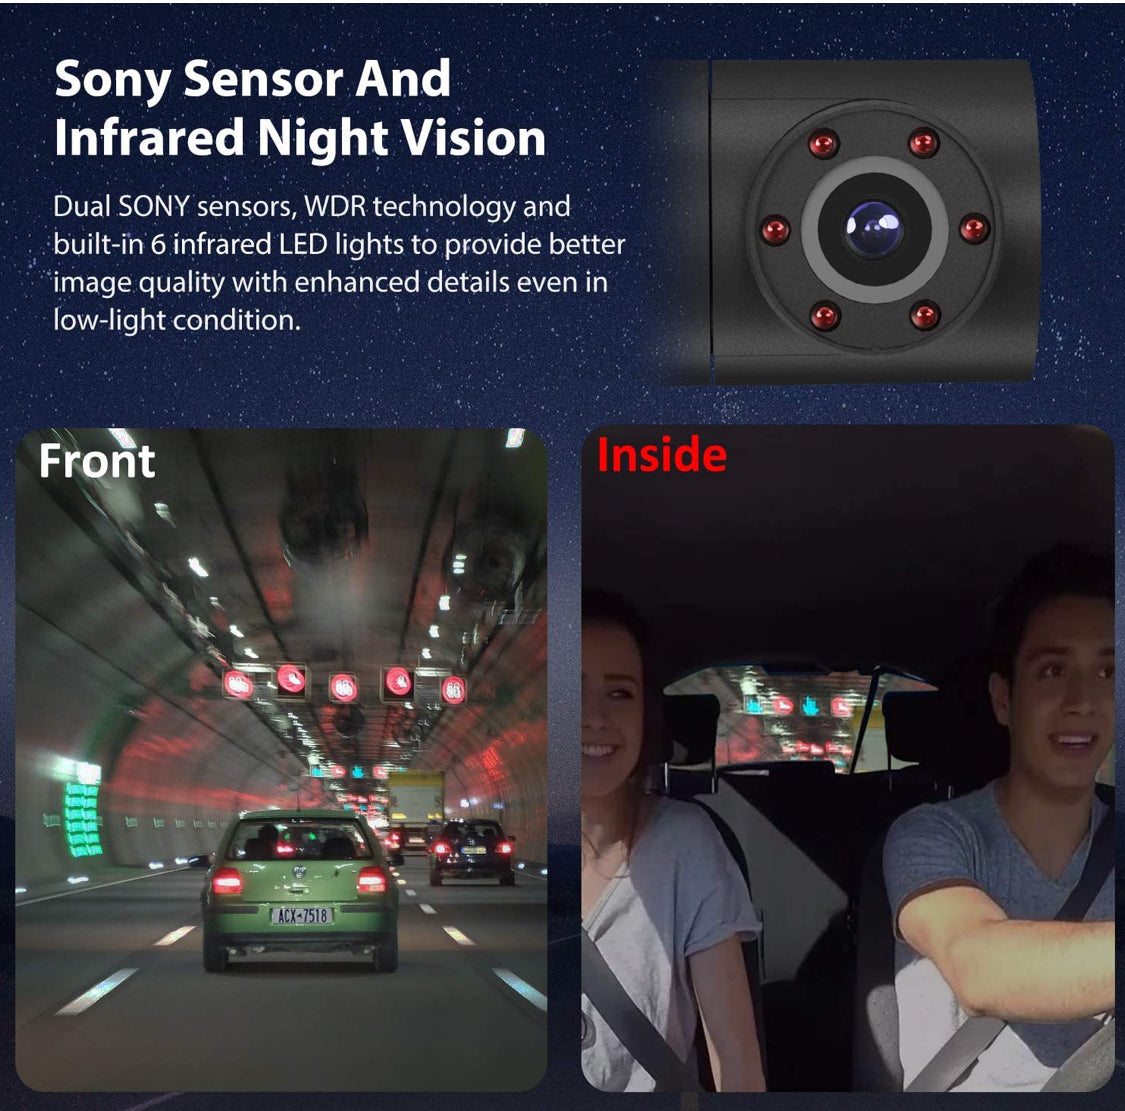 Dash Cam, FHD 1080P WiFi Car Camera, Mini Dash Camera for Car with Night  Vision, 2.45 IPS Screen, Parking Monitor, WDR, Loop Recording, G-Sensor